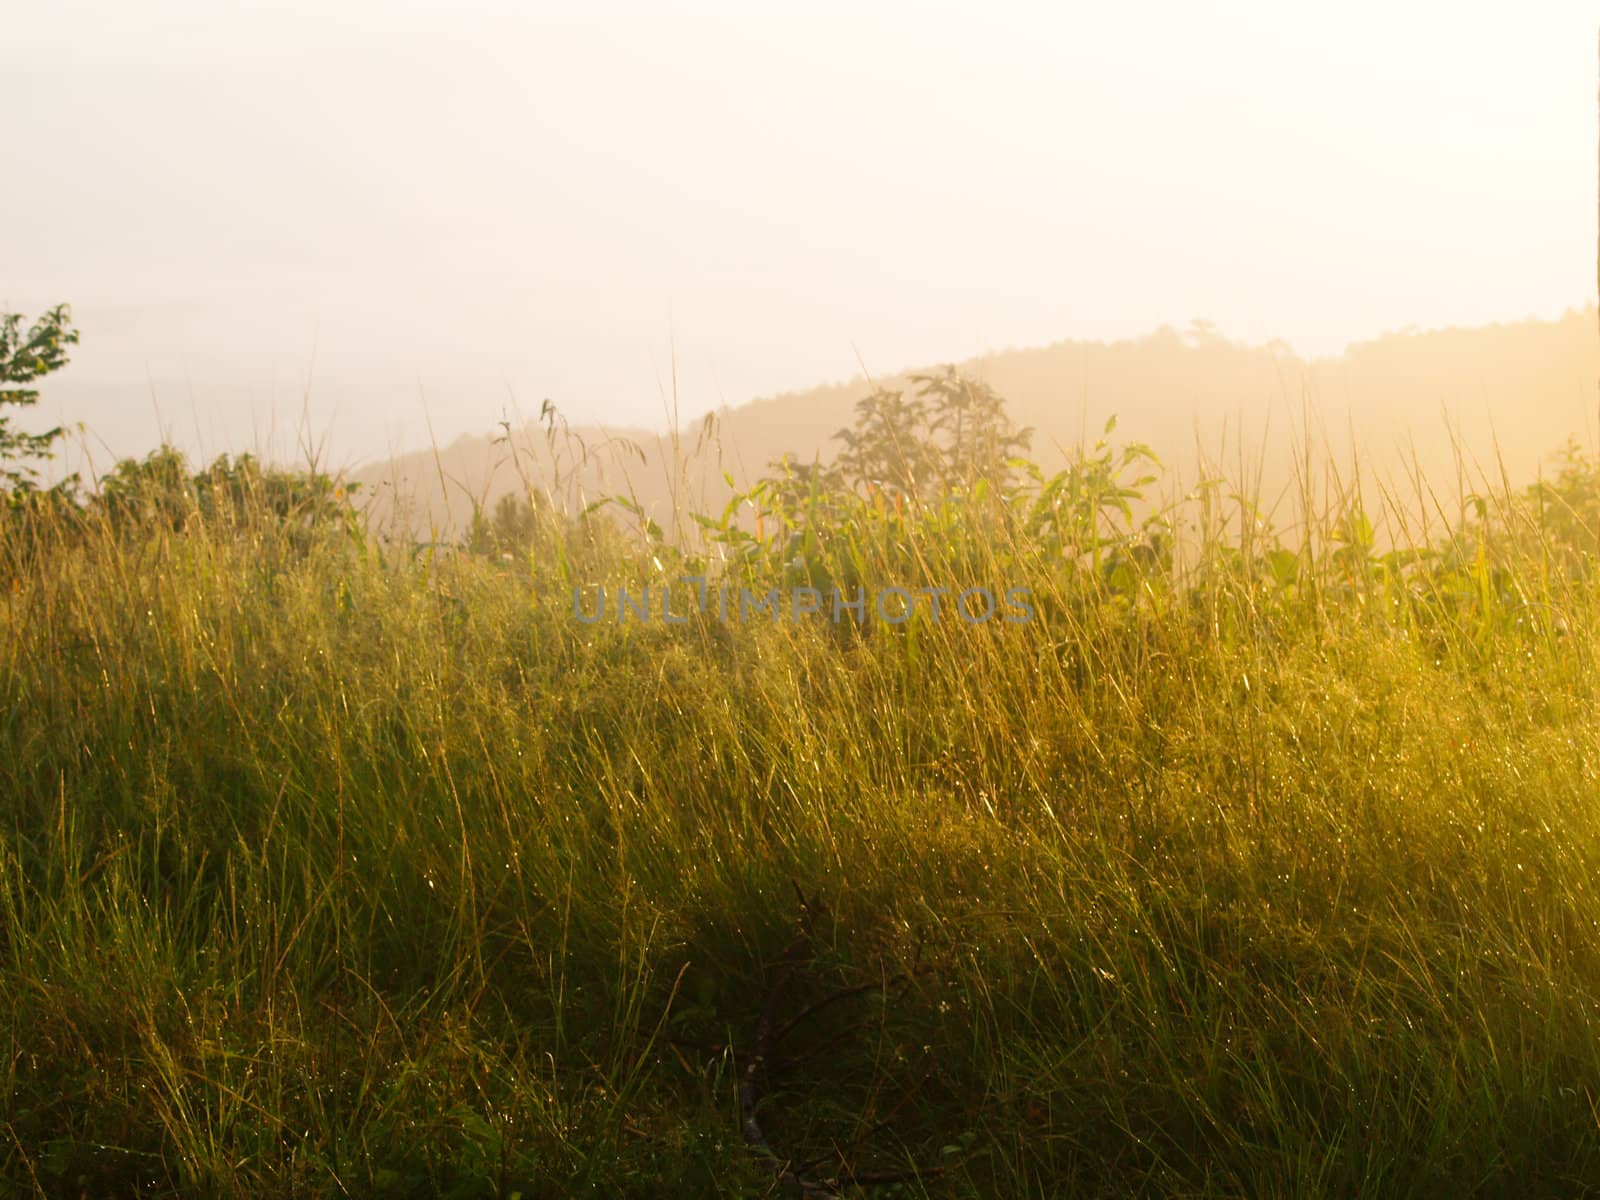 Field of grass during sunrise from Chaeng hill, Chiang rai